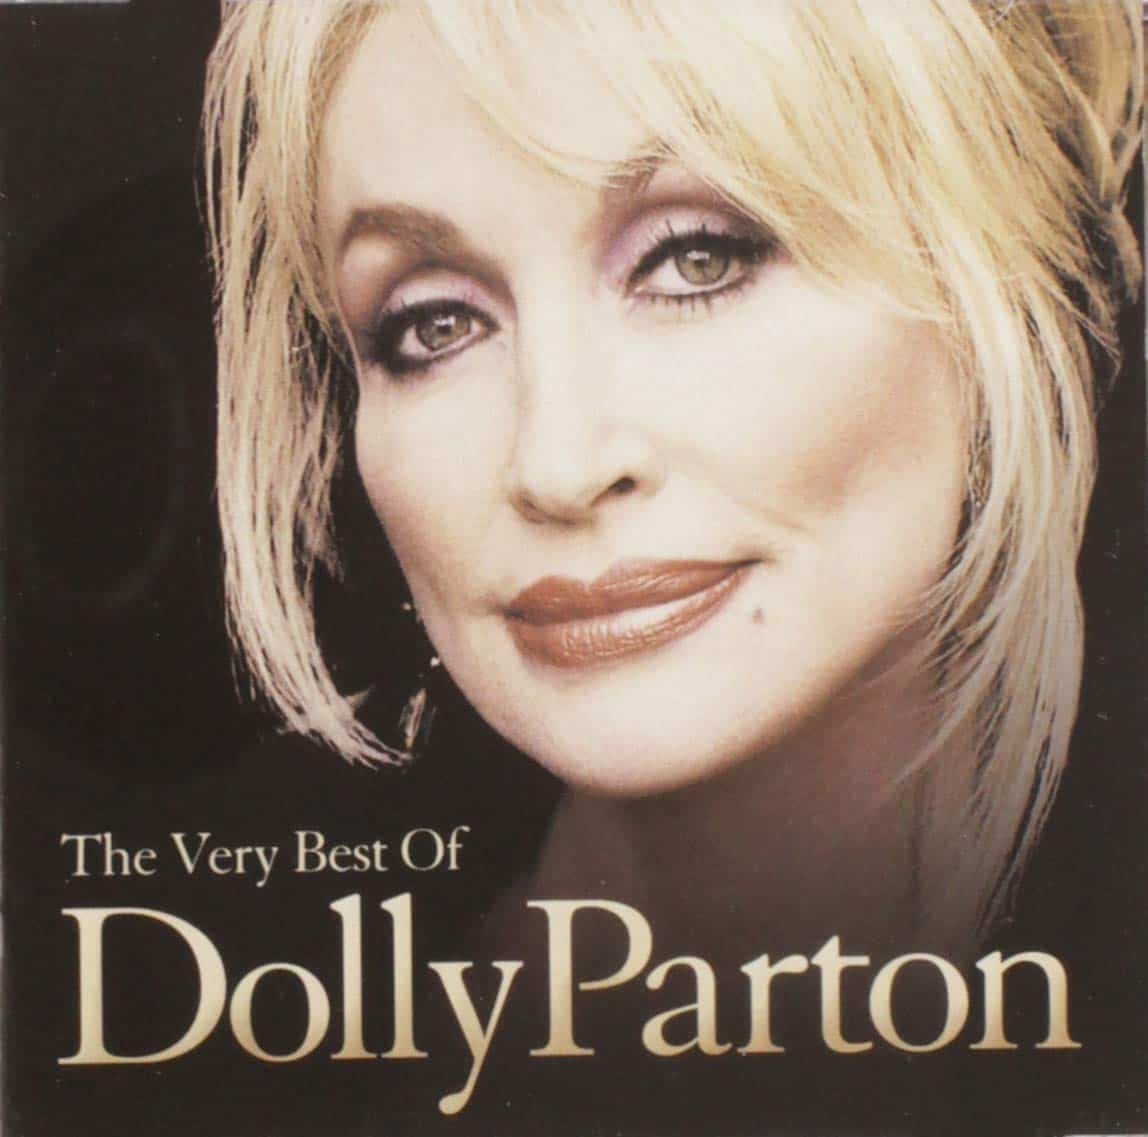 The-Very-Best-Of-Dolly-Parton-LP-vinyl-record-album-front